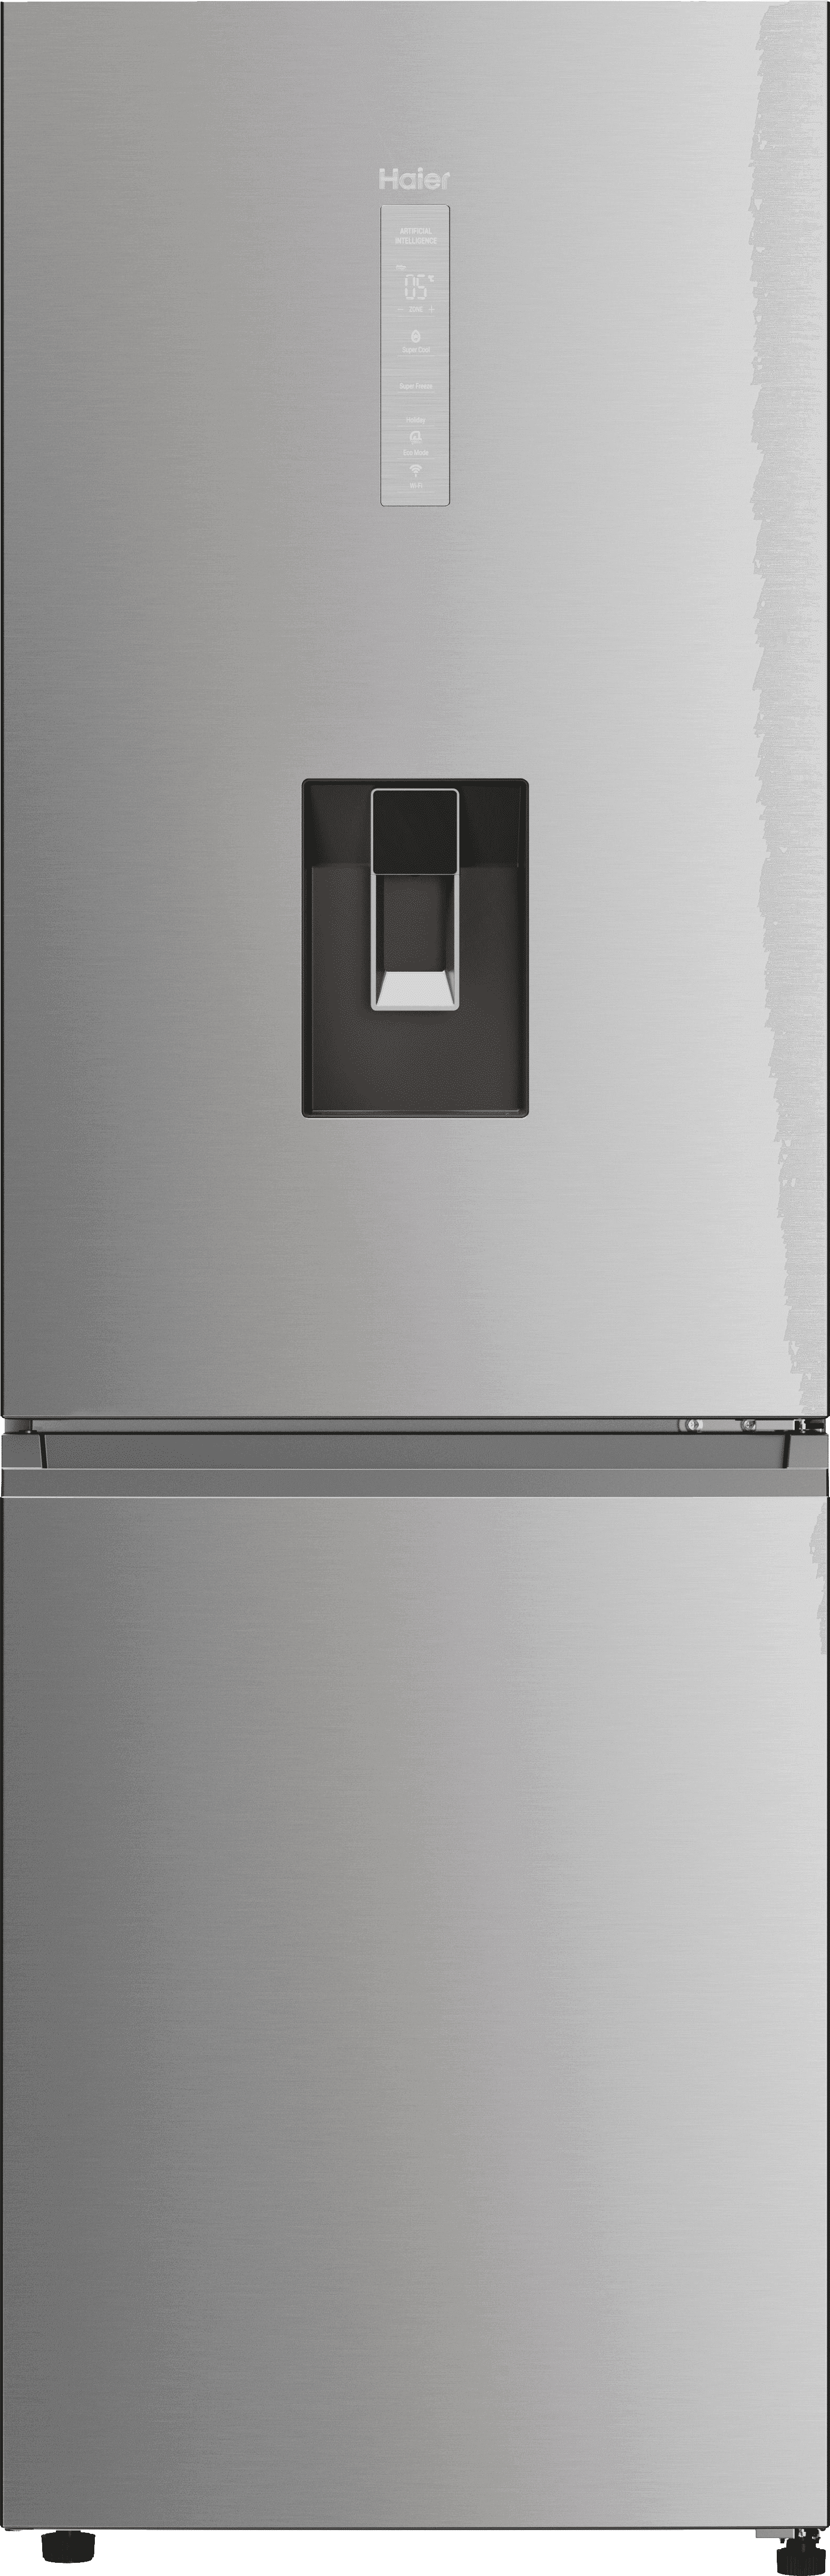 Haier HDPW5618DWPK 60/40 No Frost Fridge Freezer - Platinum Inox - D Rated, Silver